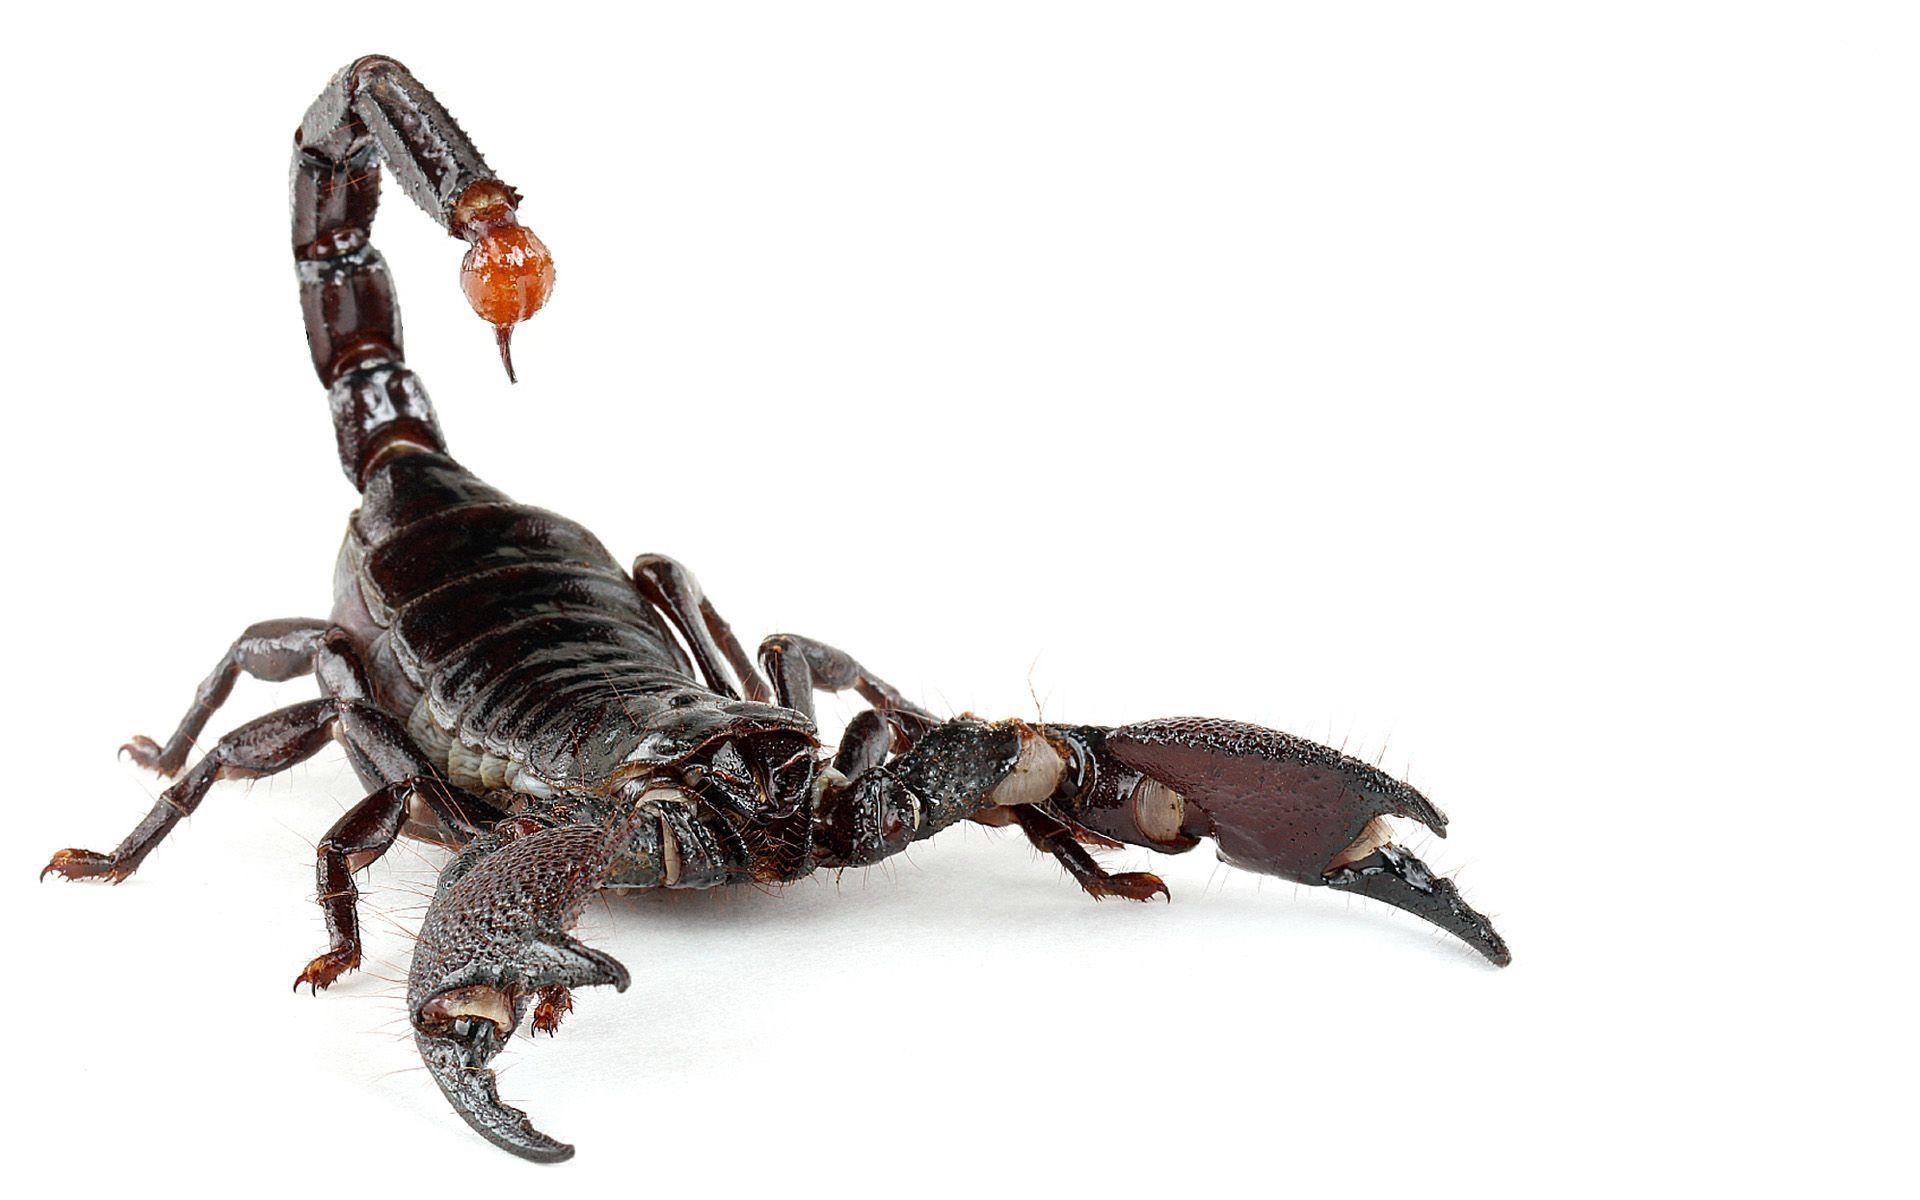 Scorpion Arachnids Desktop Wallpaper Hd, Scorpion Arachnids, Animal